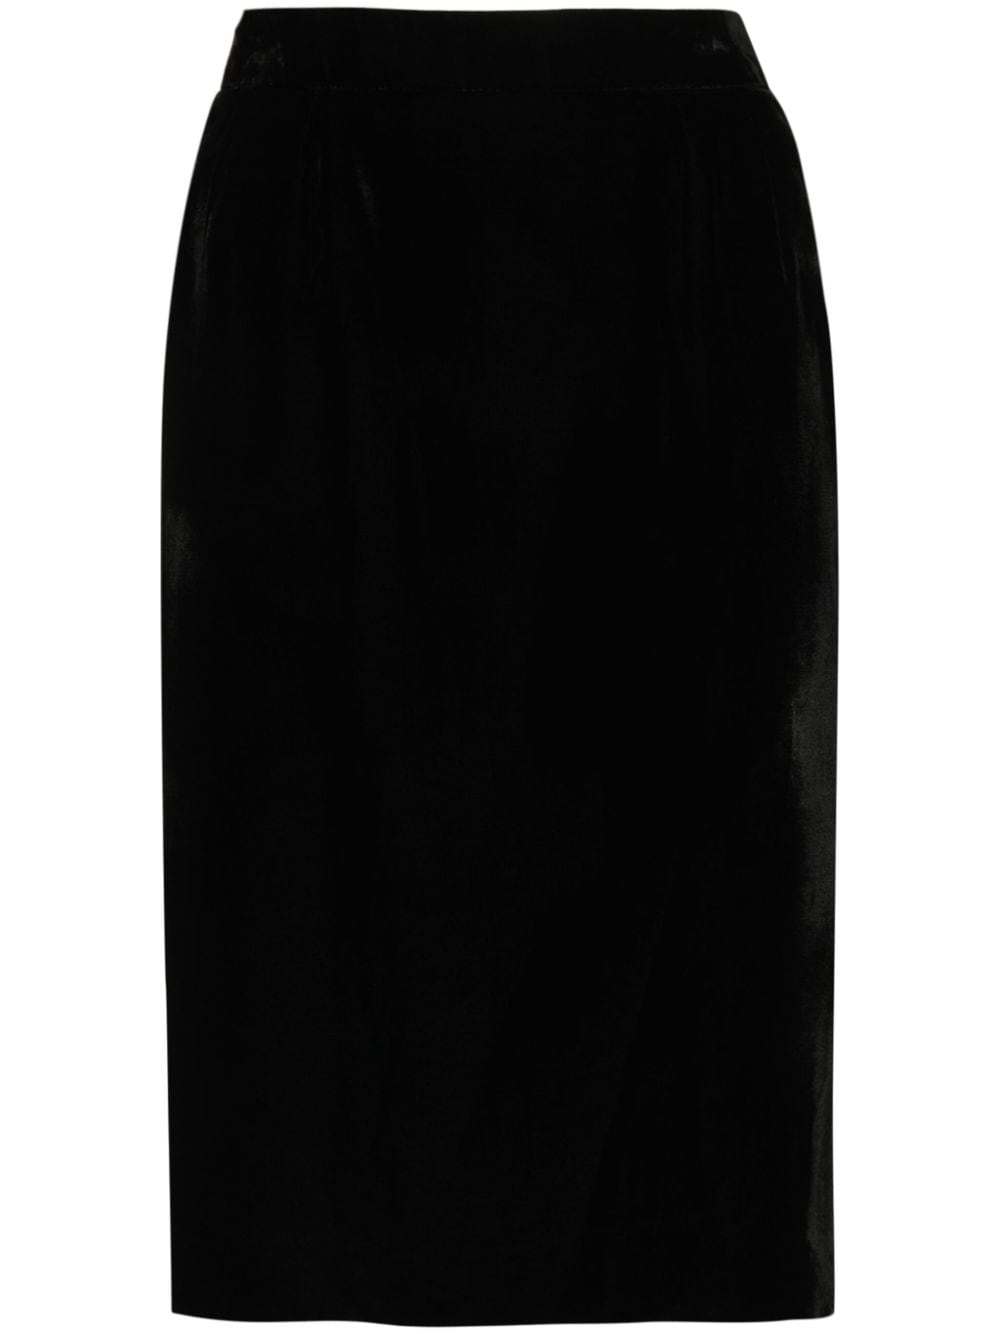 Image 1 of Christian Dior Pre-Owned бархатная юбка прямого кроя 1980-х годов